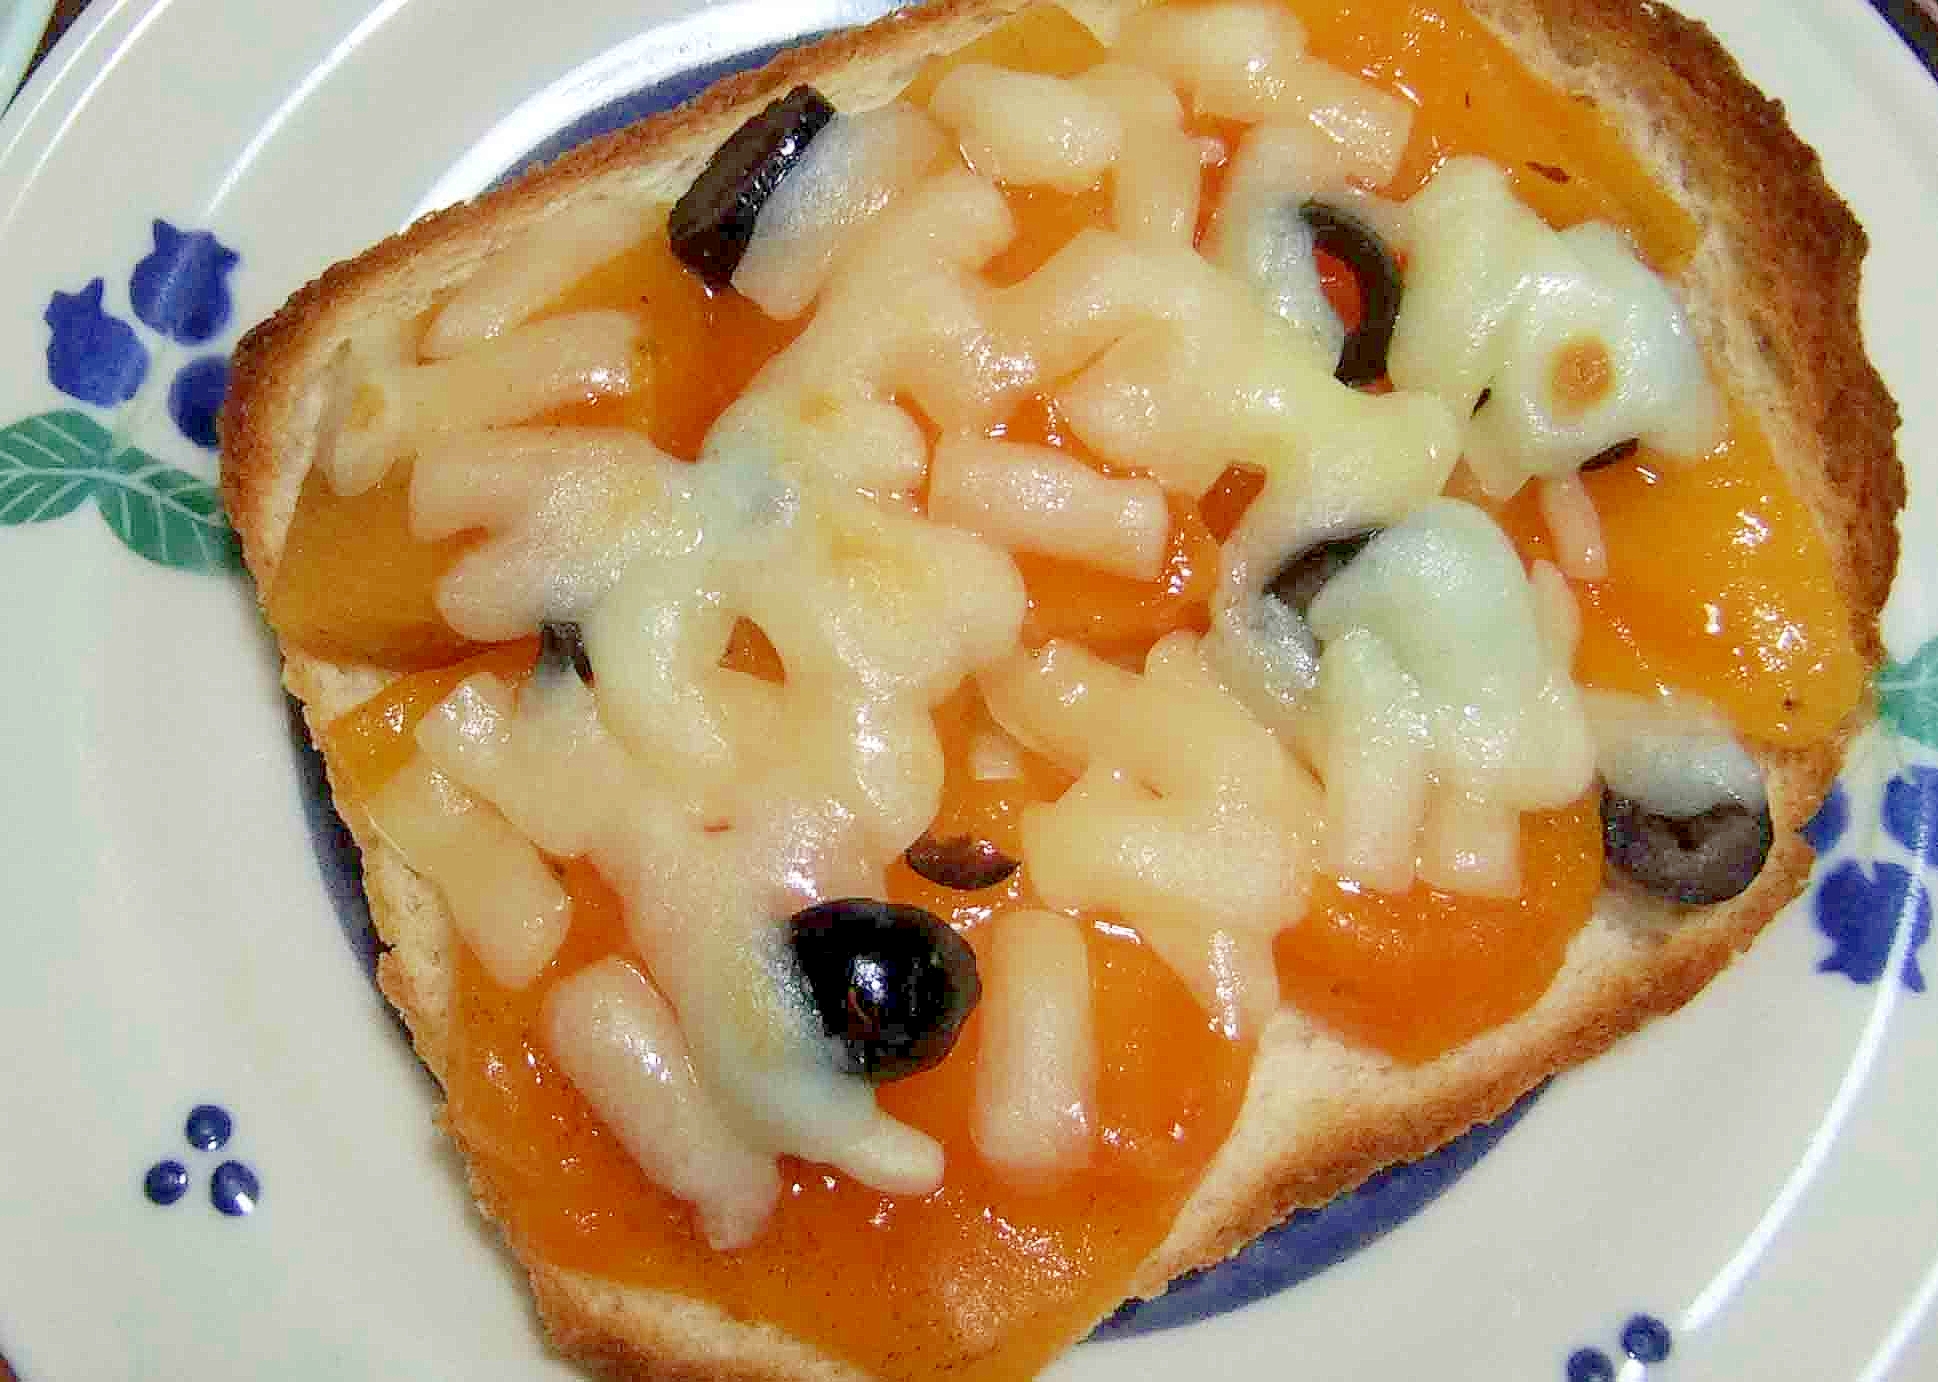 柿とチーズのトースト